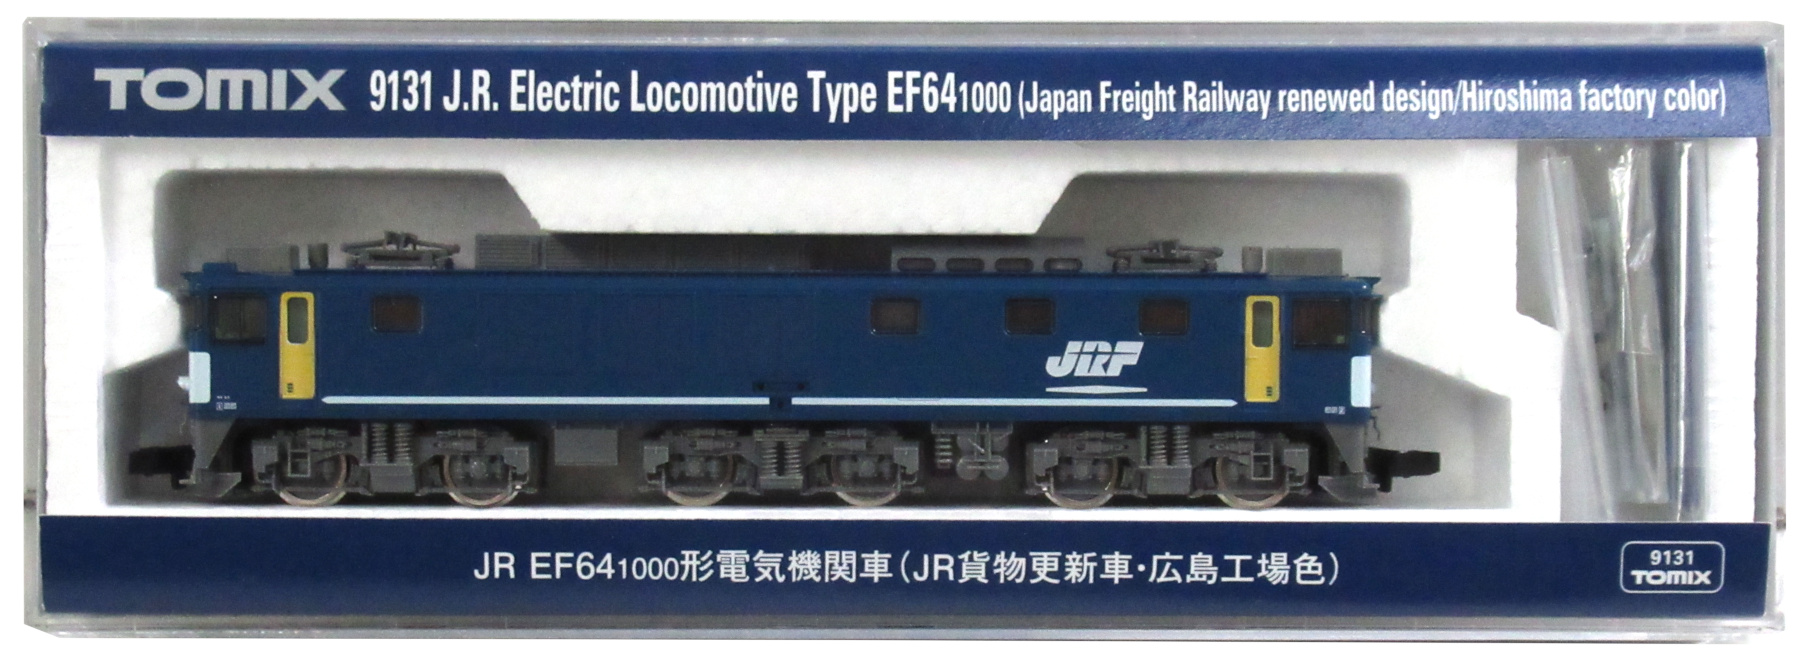 9131 JR EF64-1000 更新車・広島工場色